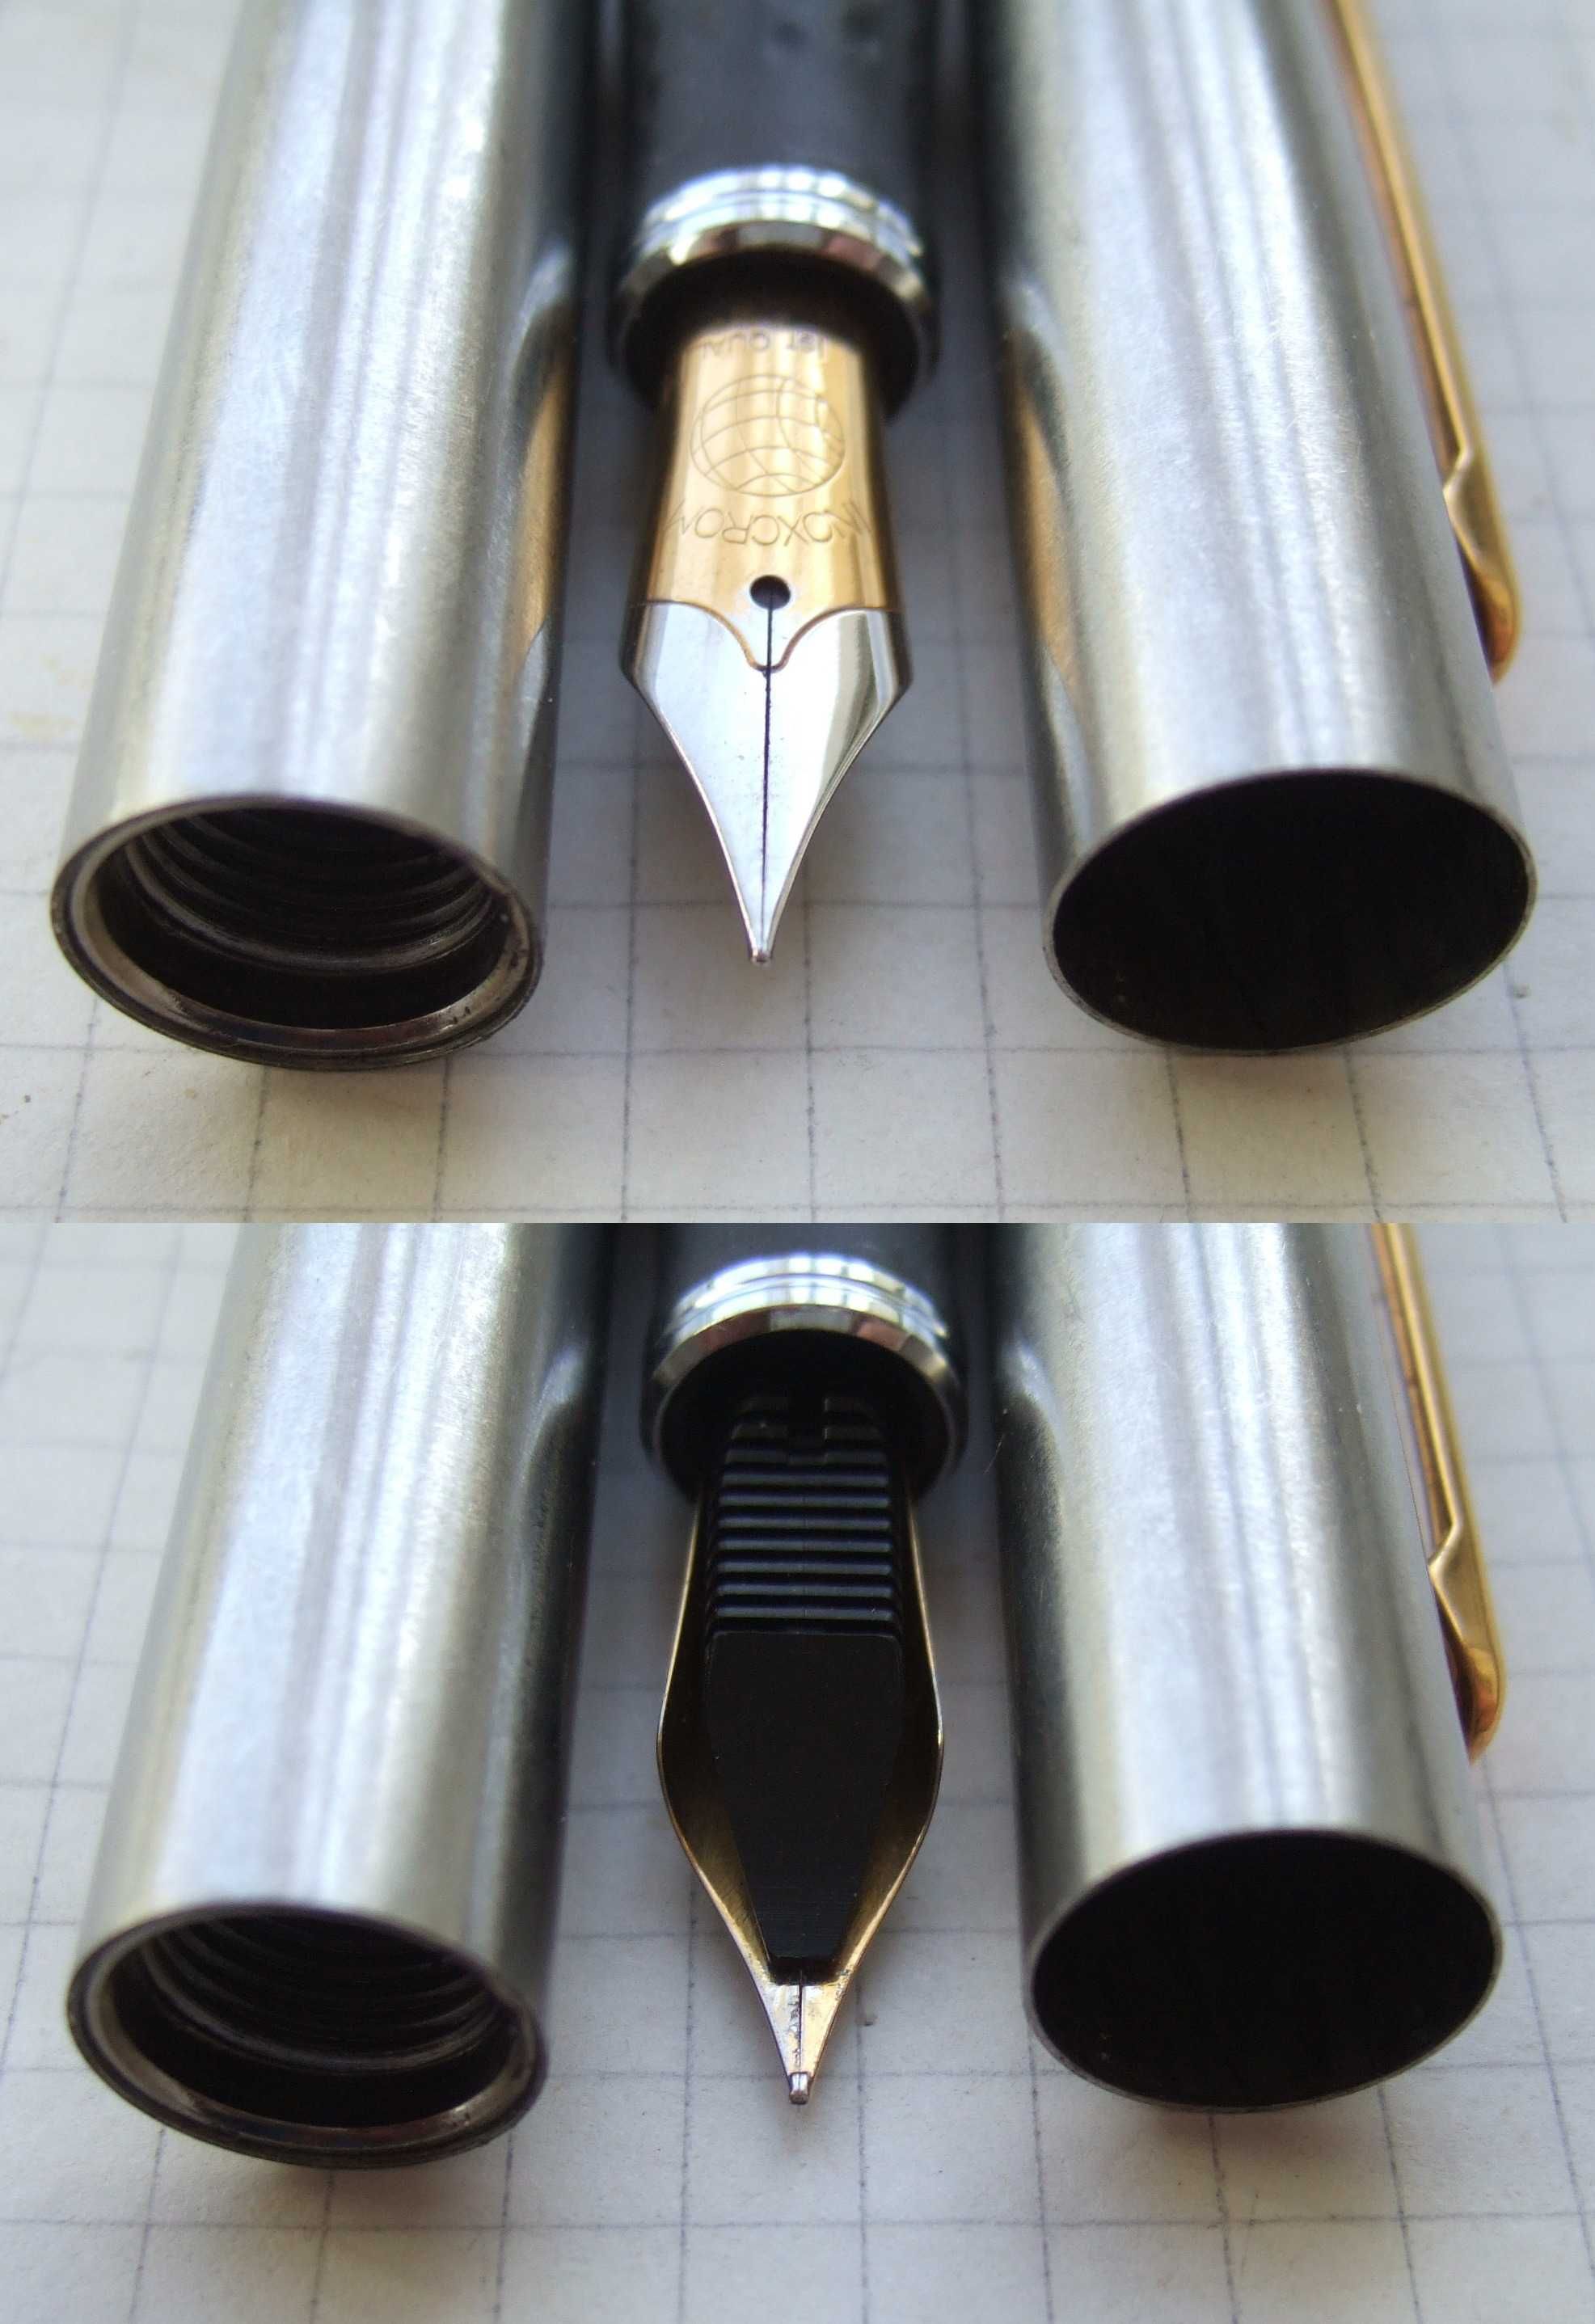 Перова ручка Inoxcrom товста з великим пером. Пише м'яко і насичено